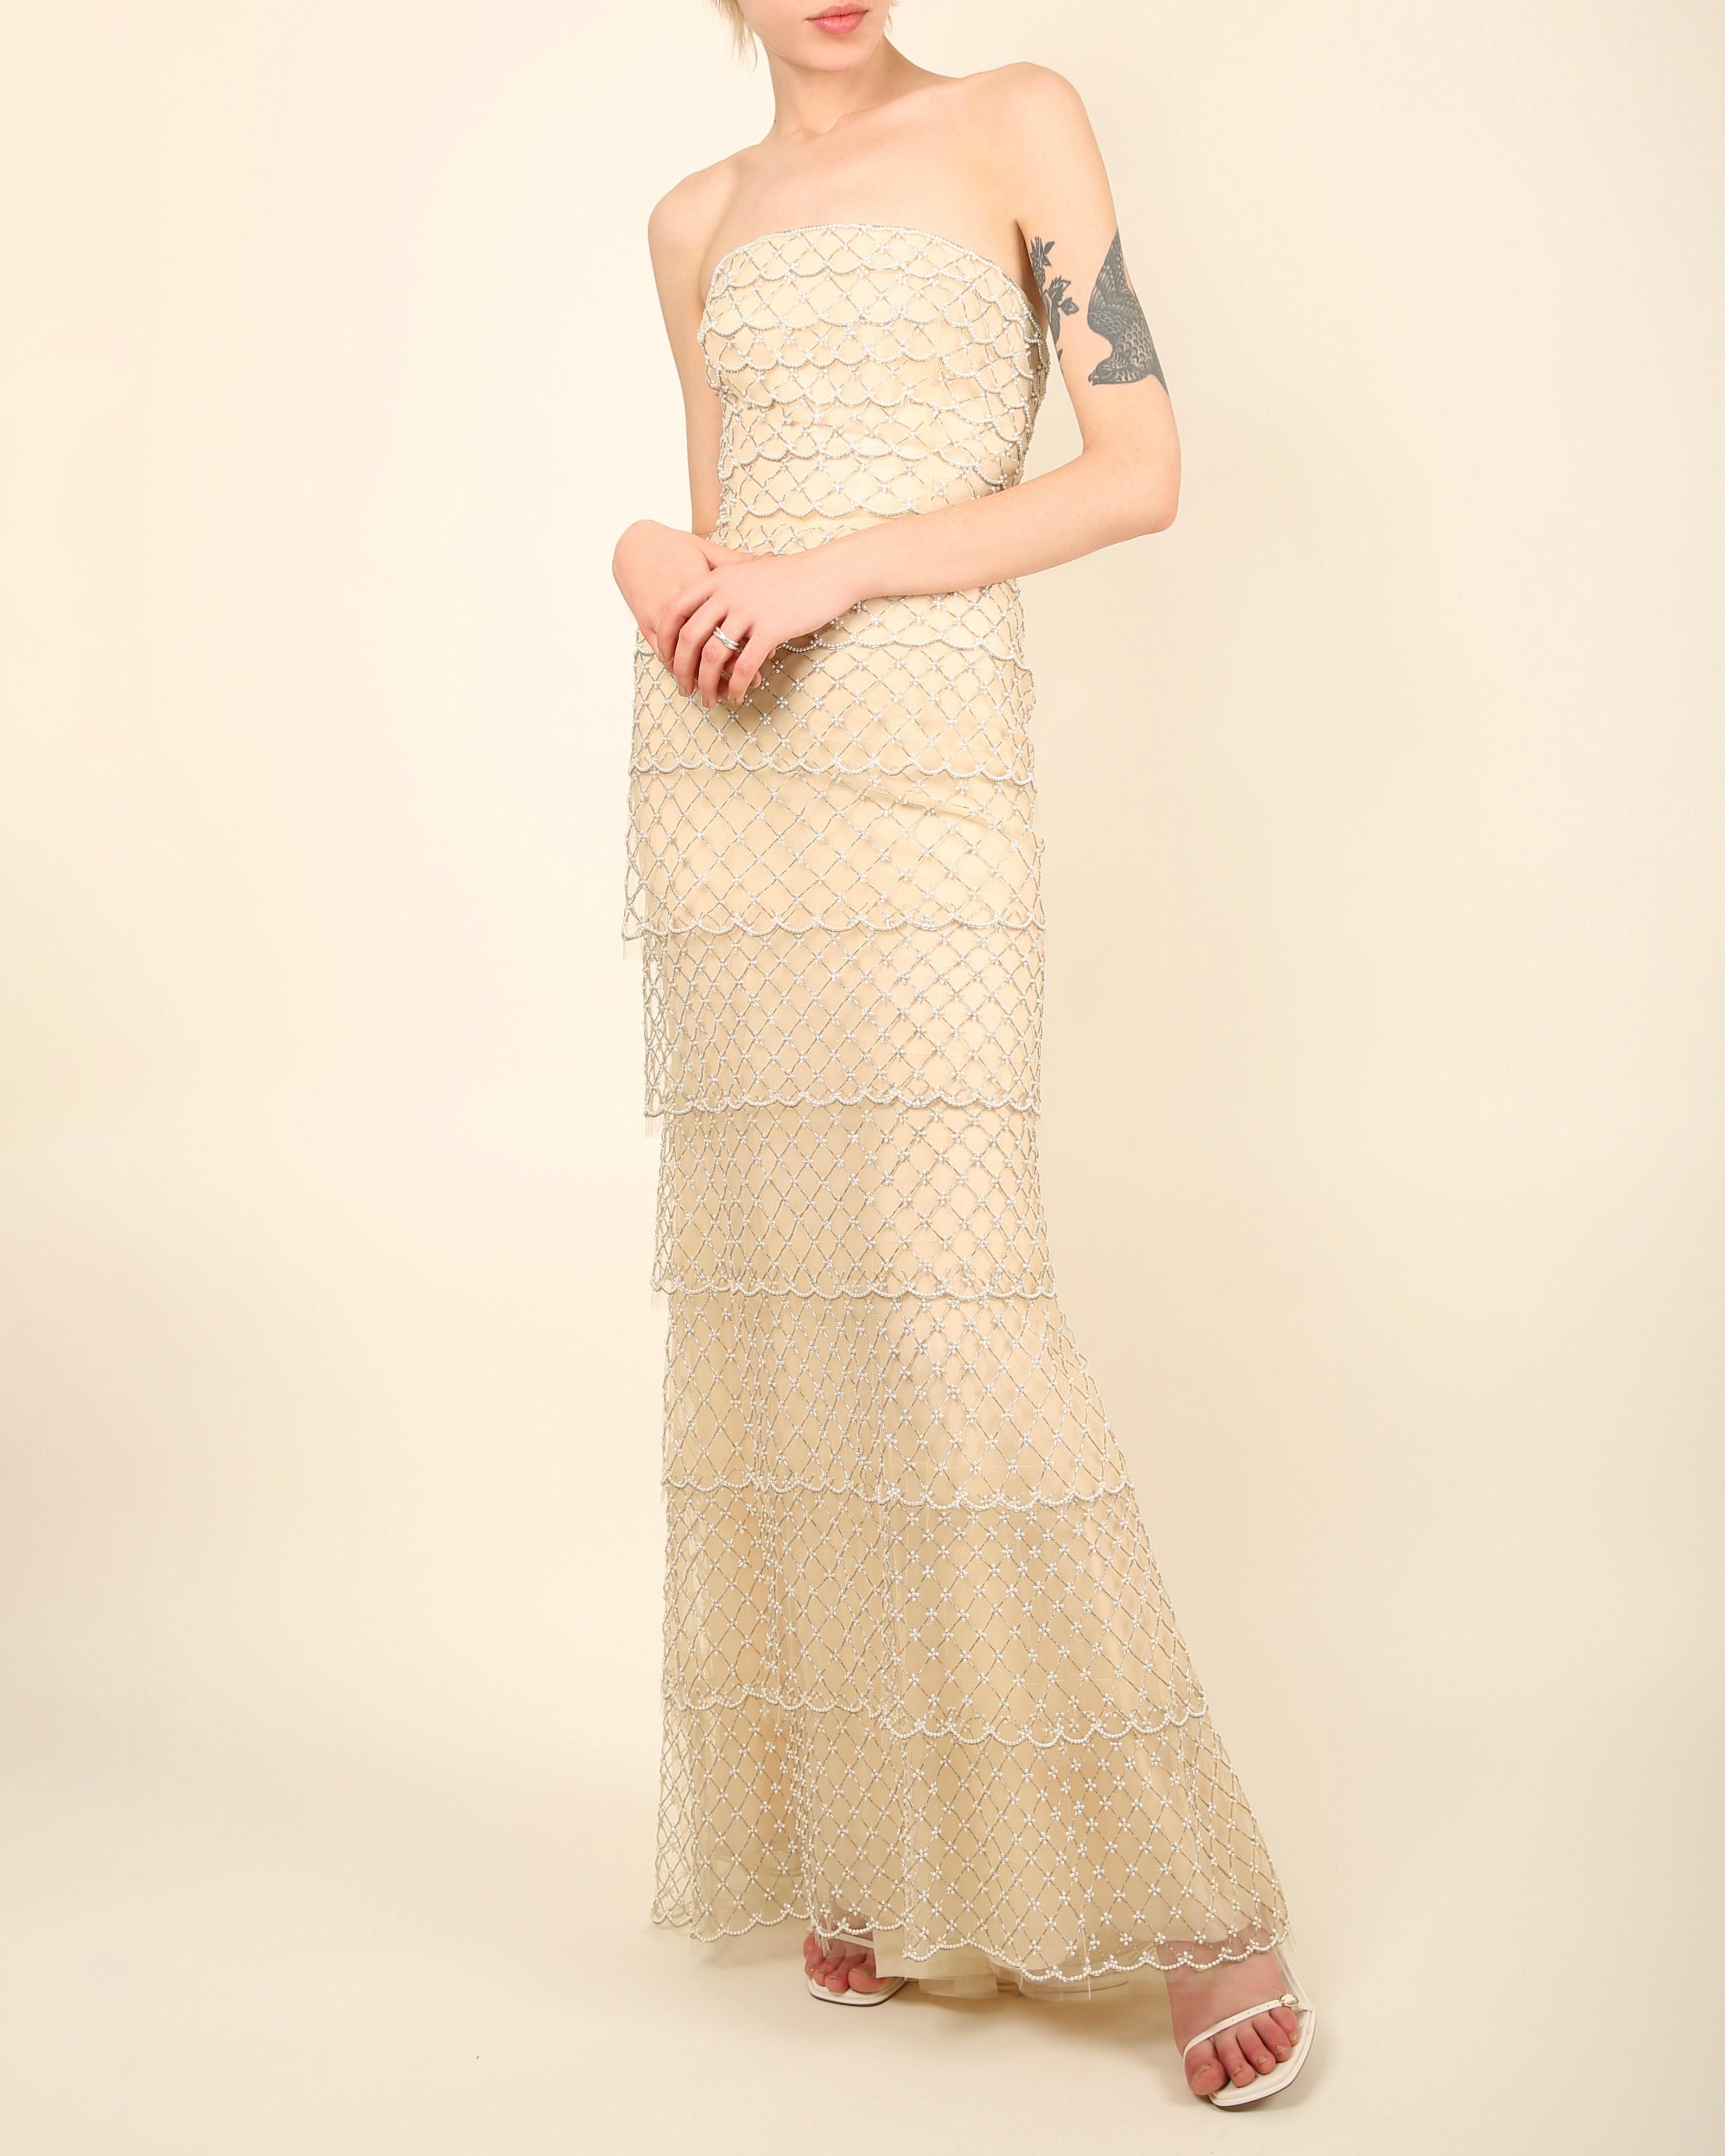 Beige Oscar de la Renta S/S 2014 strapless tiered sheer mesh pearl wedding dress gown For Sale